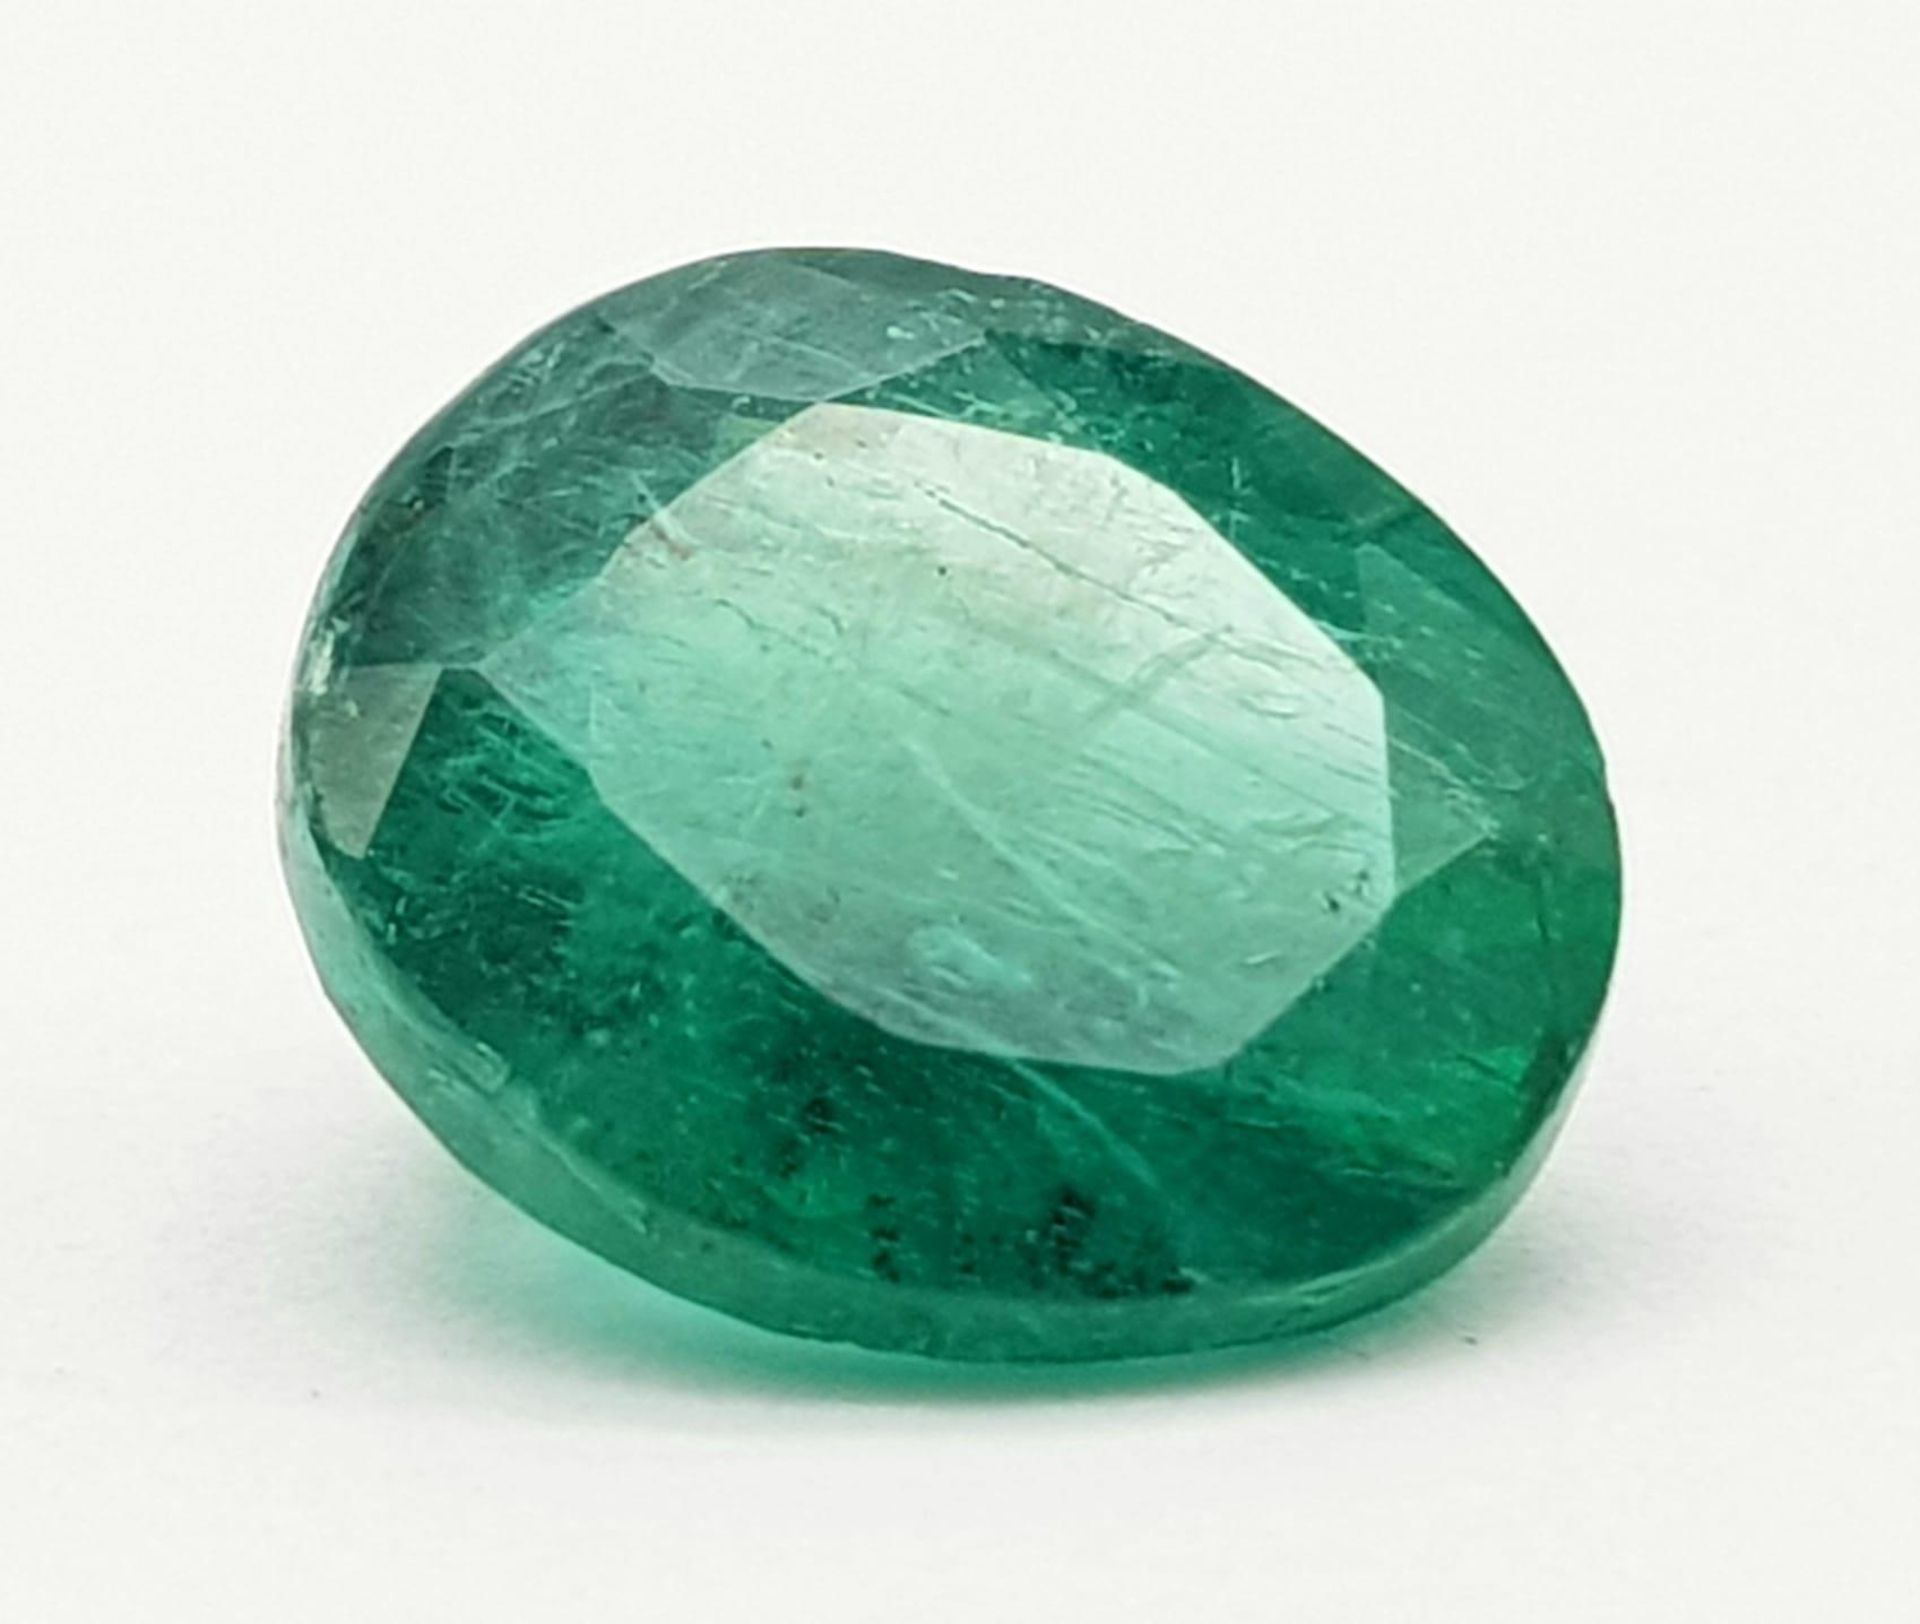 A 4.86ct Zambian Emerald - GTL certified.